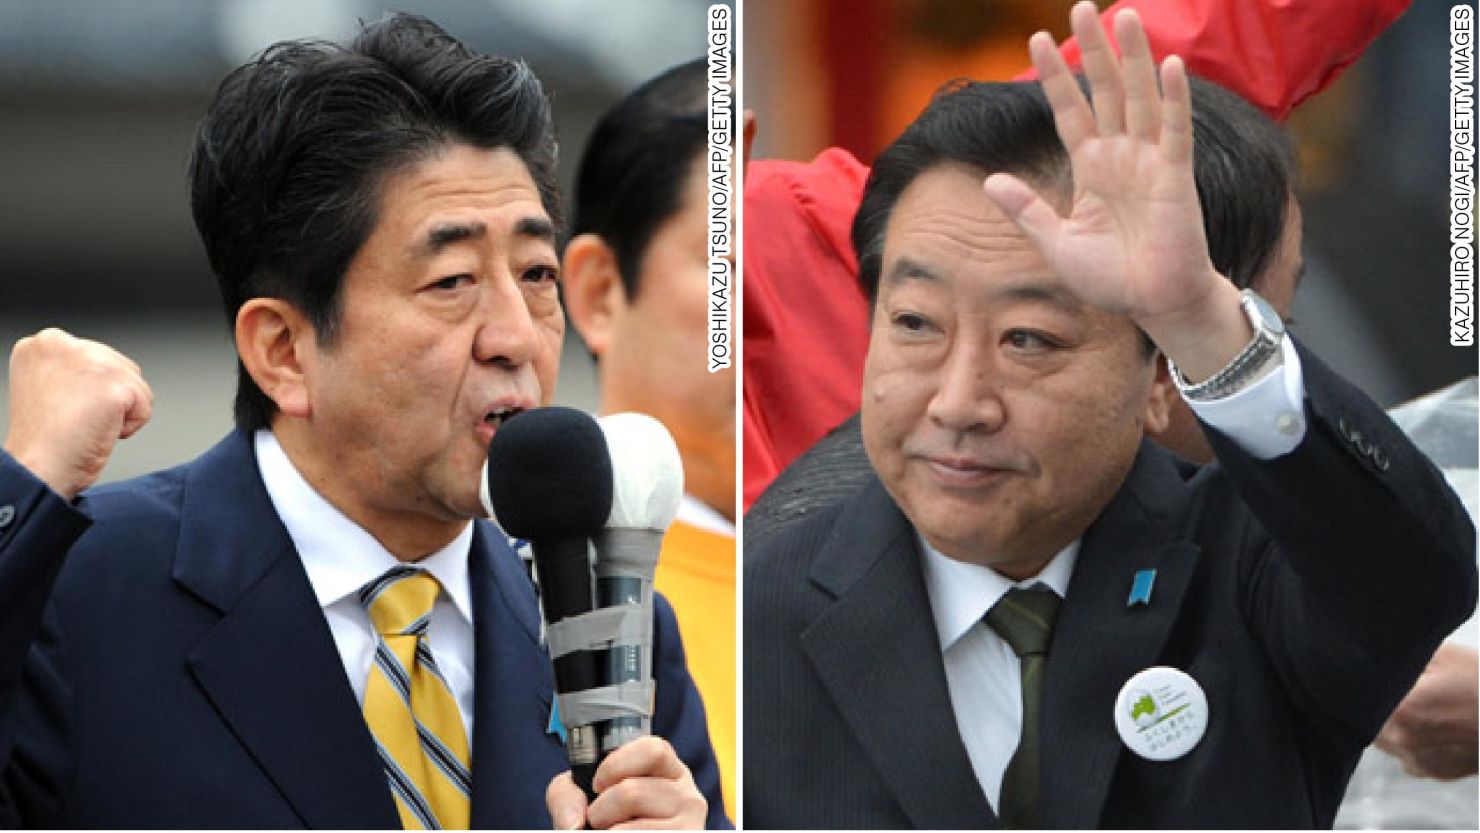 Shinzo Abe of the Liberal Democratic Party (L) is leading opinion polls ahead of incumbent Yoshihiko Noda (R).